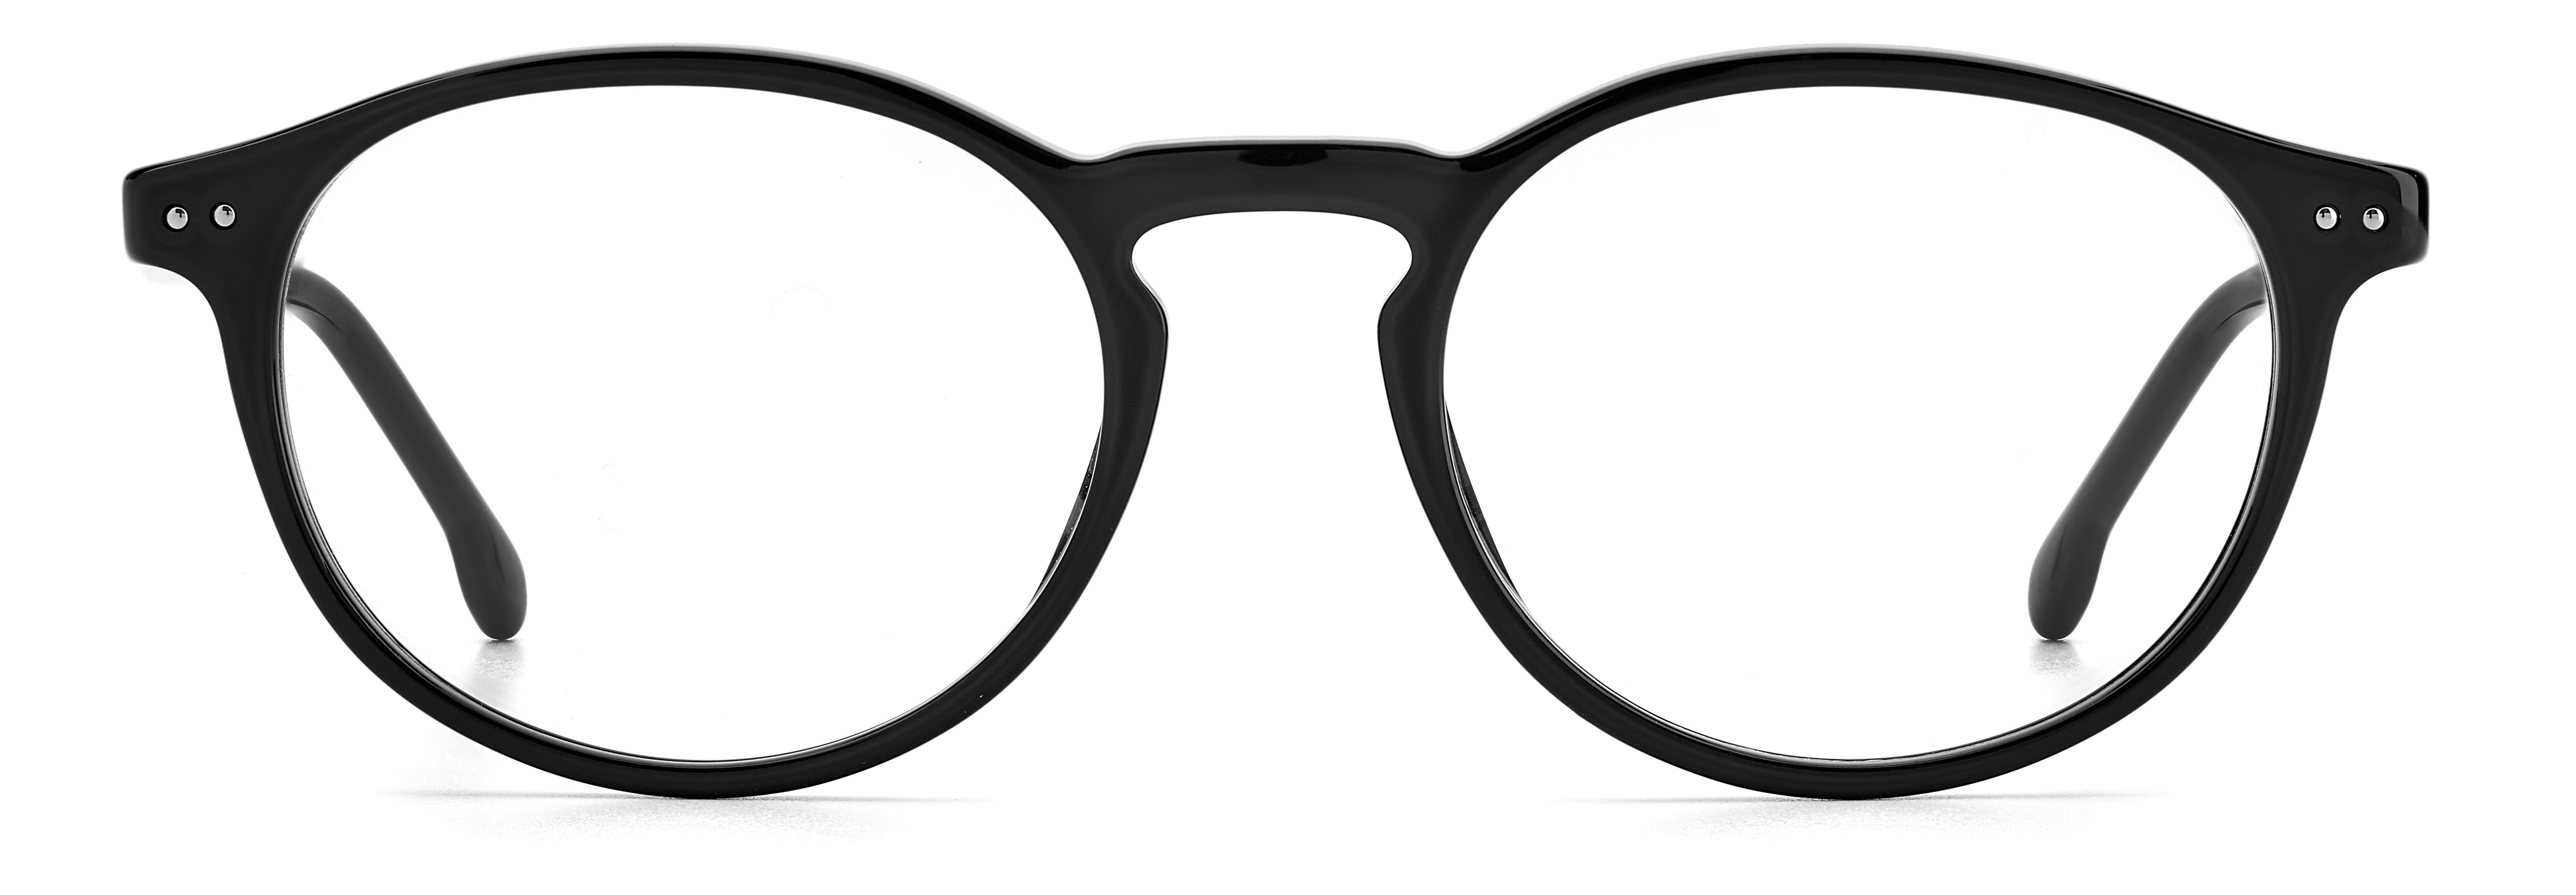 Sunglasses,specsmart, spec smart, glasses, eye glasses glasses frames, where to get glasses in lagos, eye treatment, wellness health care group, carrera 2026T